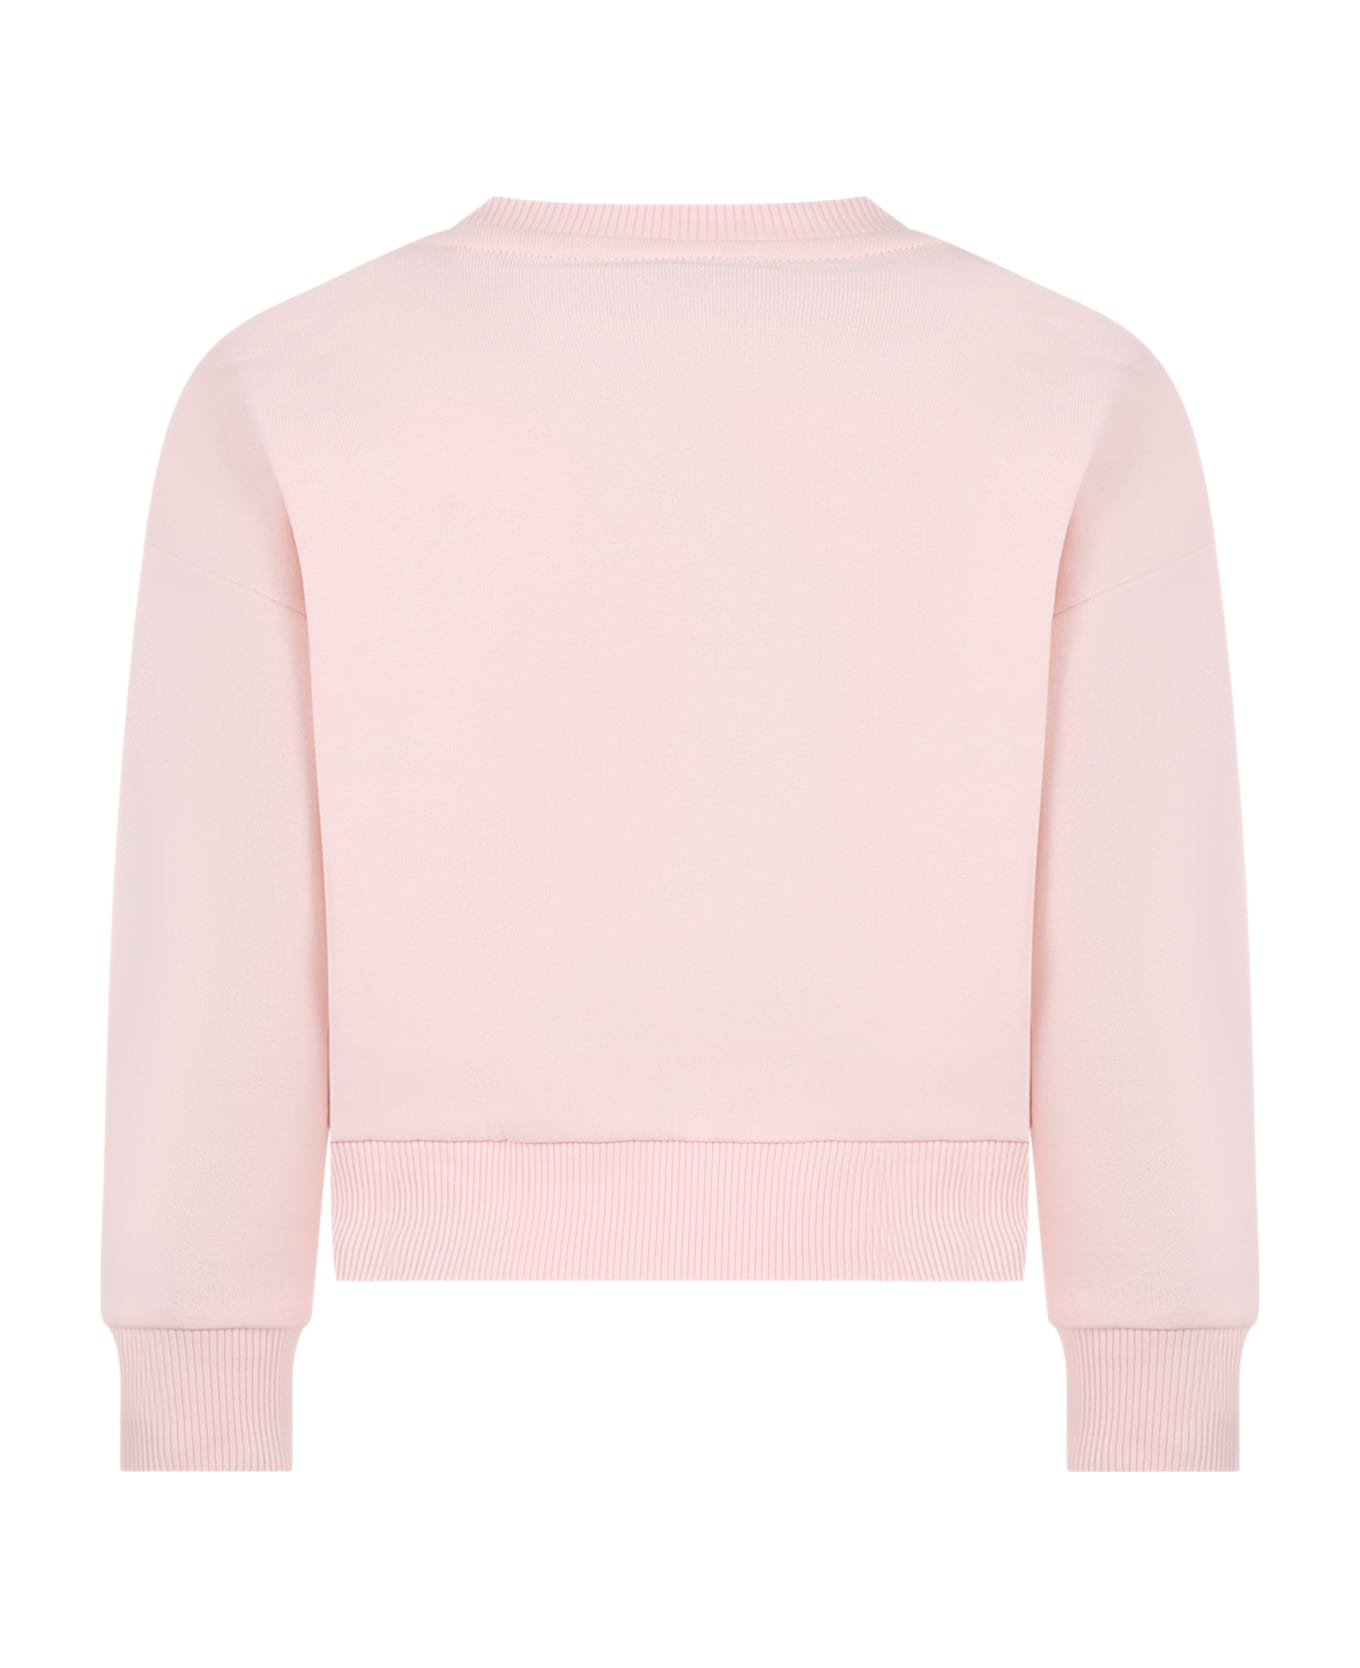 Kenzo Kids Pink Sweatshirt For Girl With Logo - Levis® Black Batwing Logo Hoodie